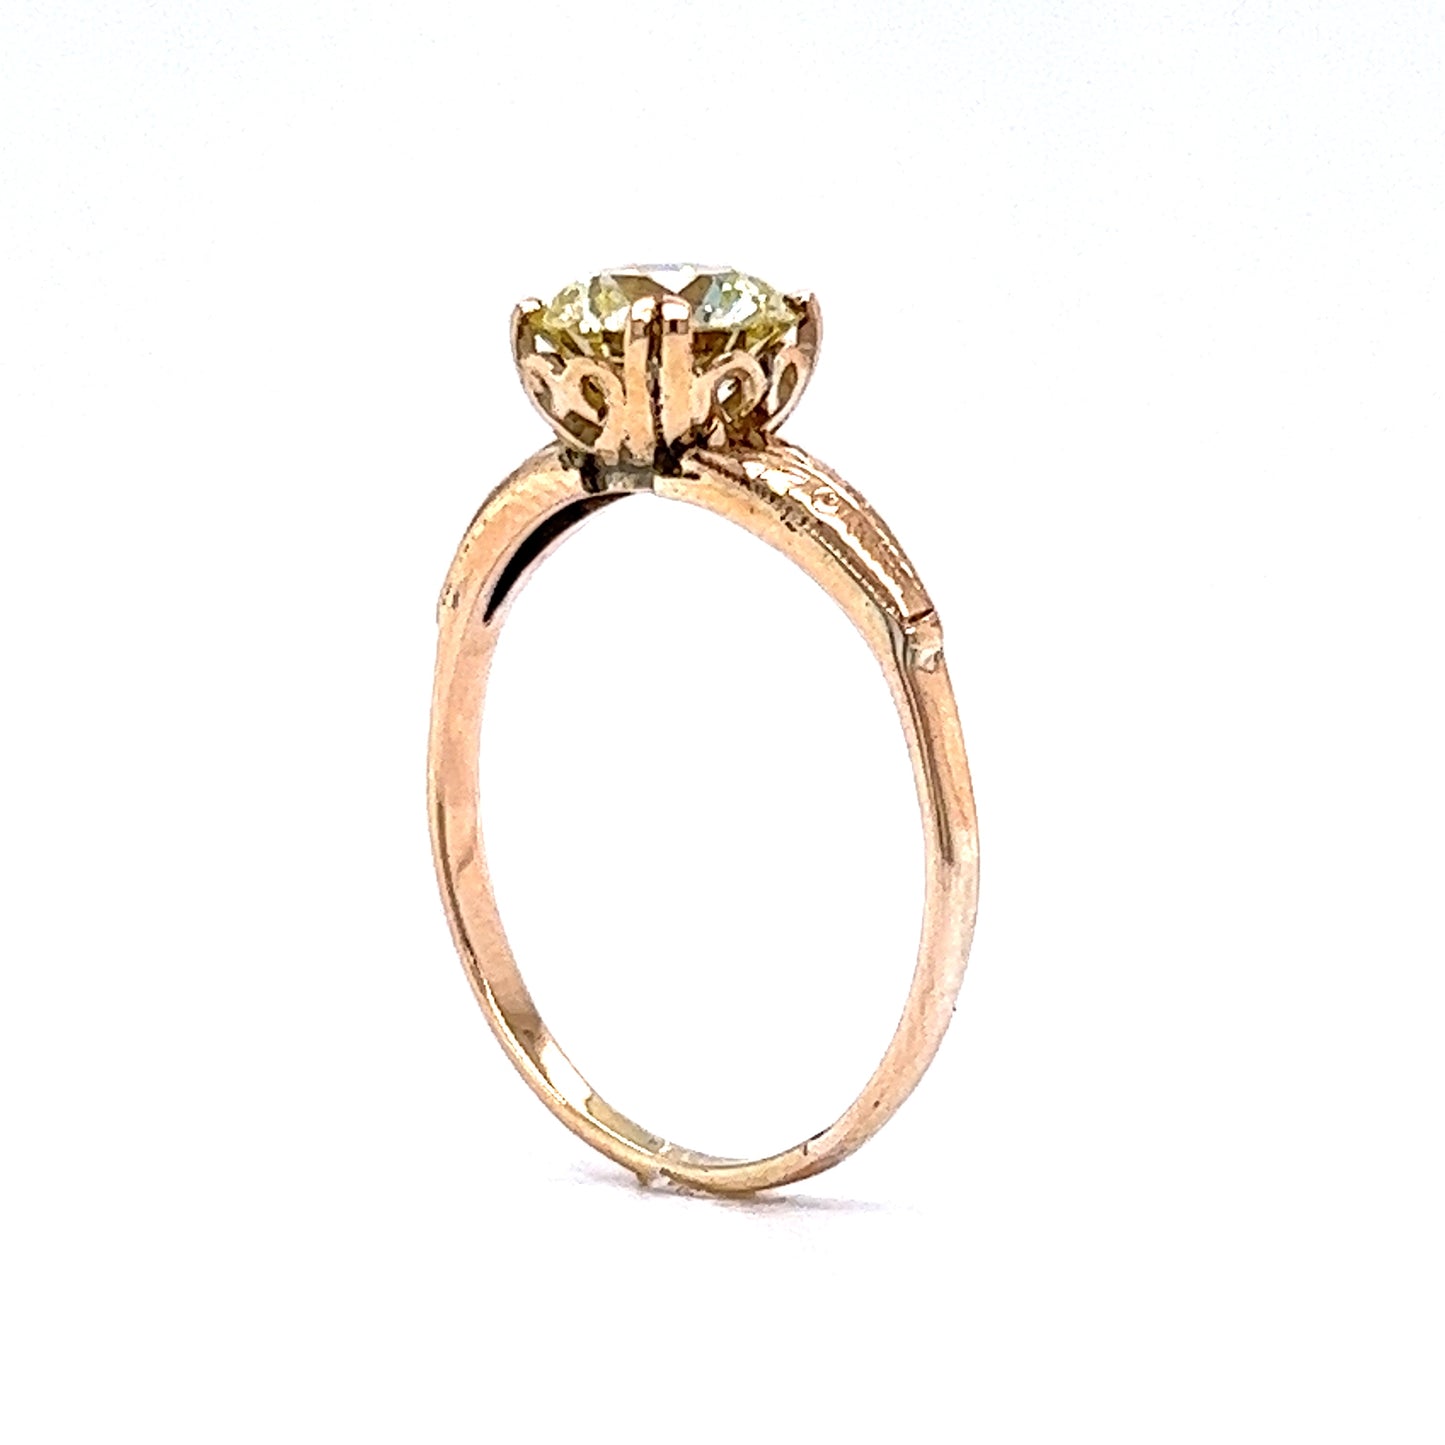 Vintage 1.16 Old European Cut Diamond Engagement Ring in 14k Rose Gold